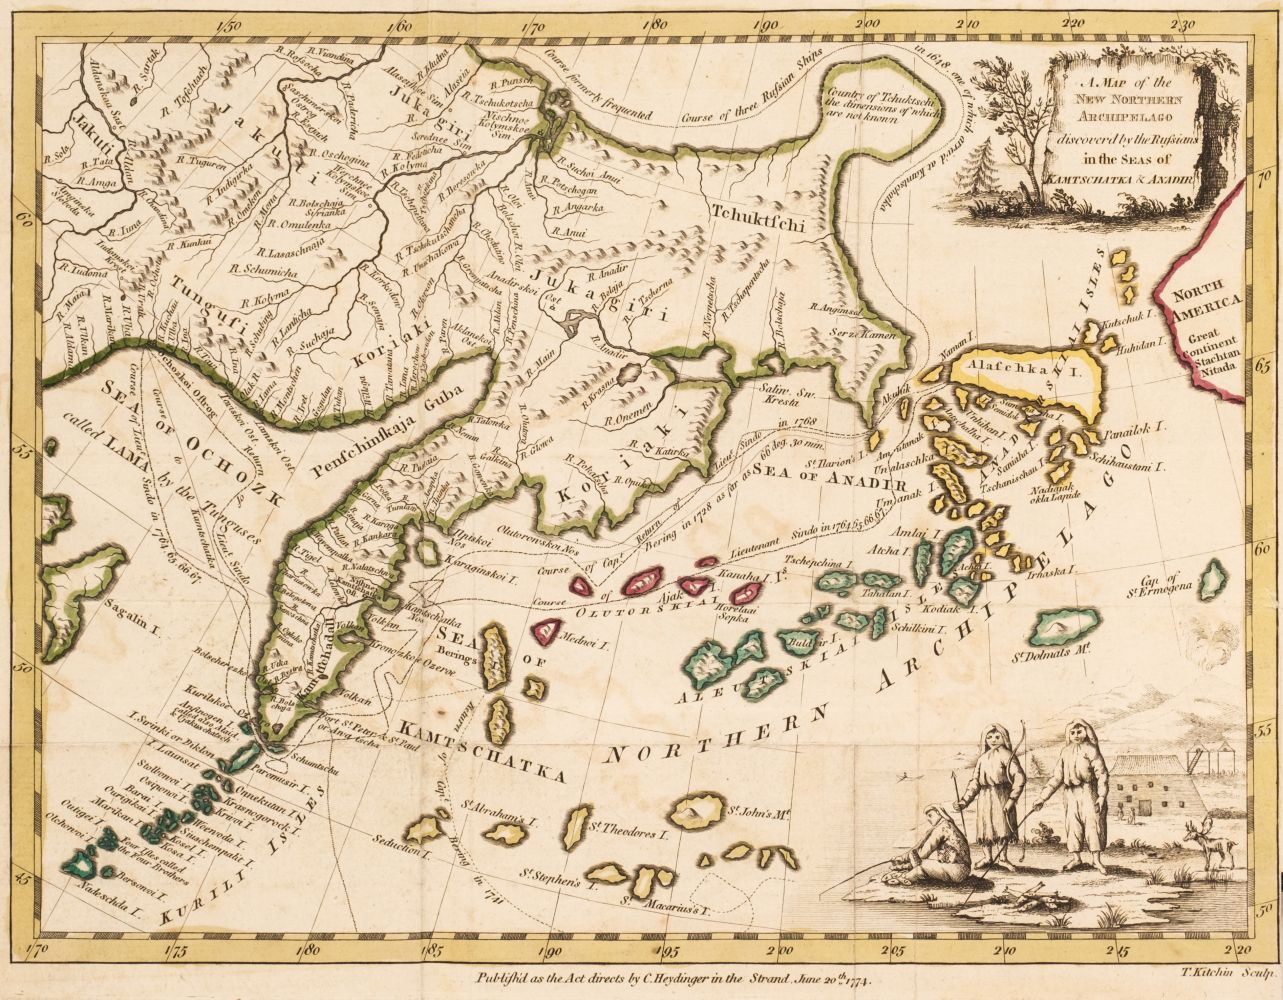 Staehlin (Jakob von). An Account of a new Northern Archipelago..., 1774